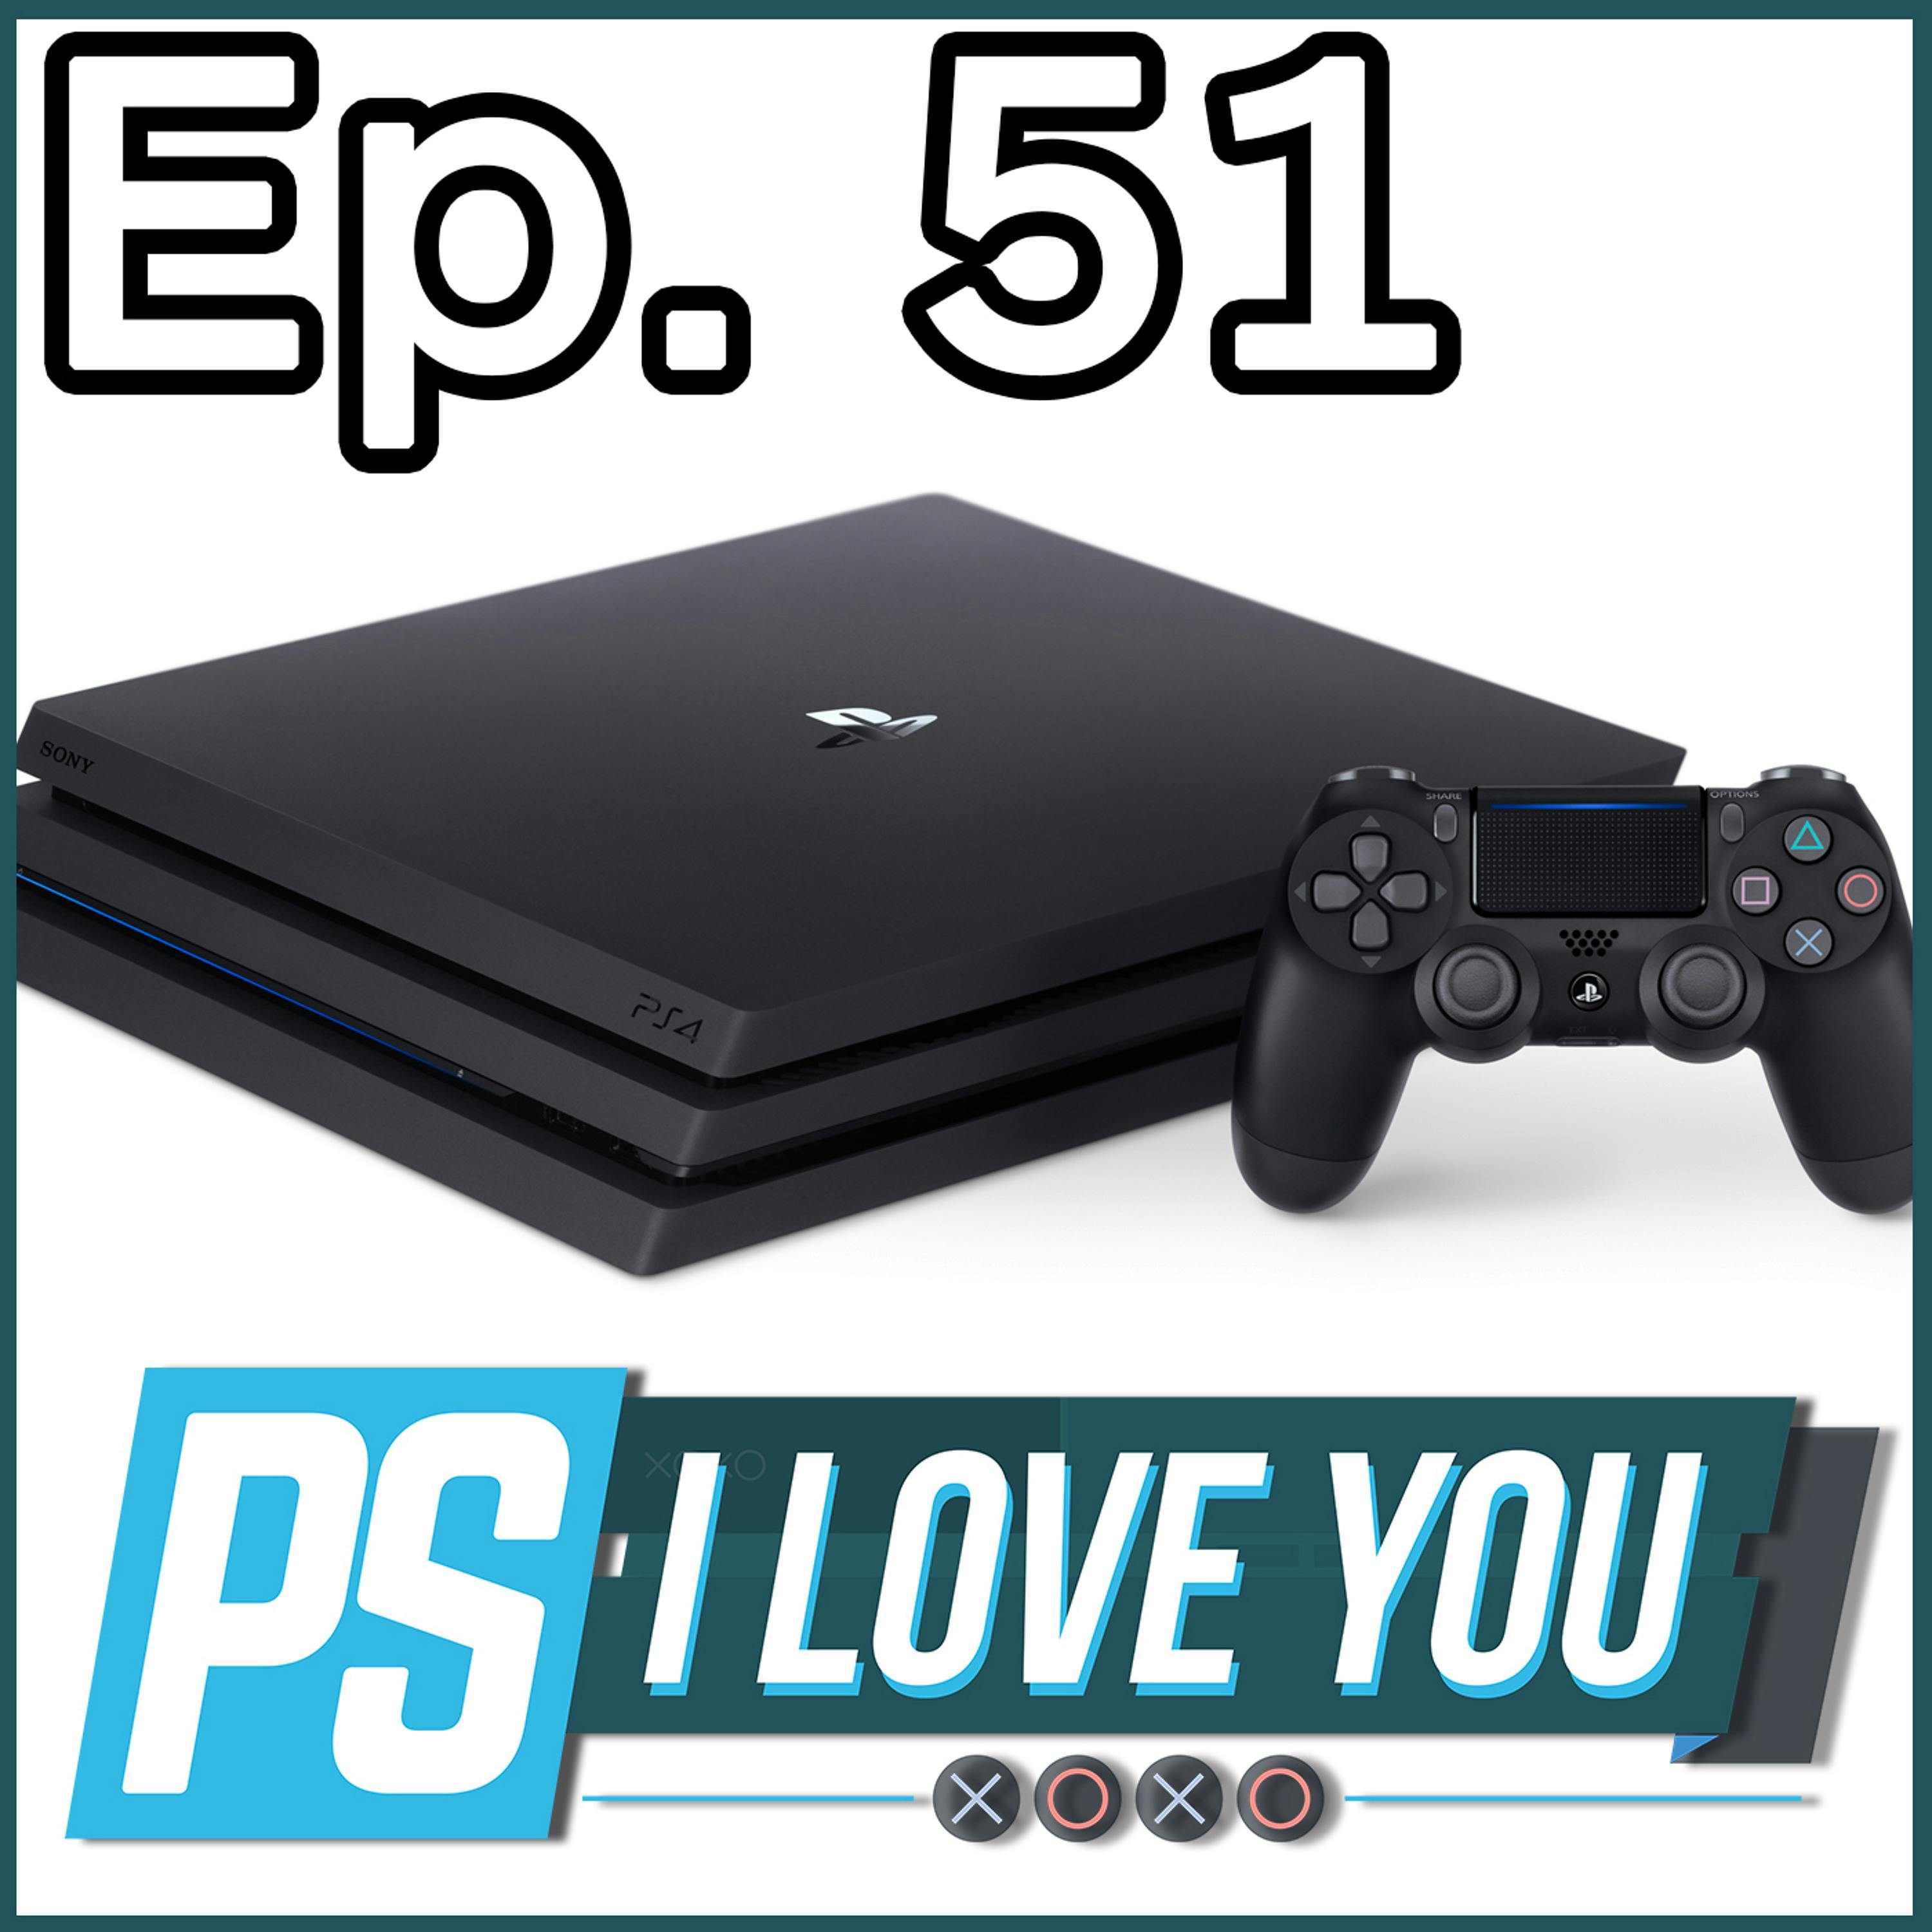 PlayStation 4 Pro Reaction - PS I Love You XOXO Ep. 51